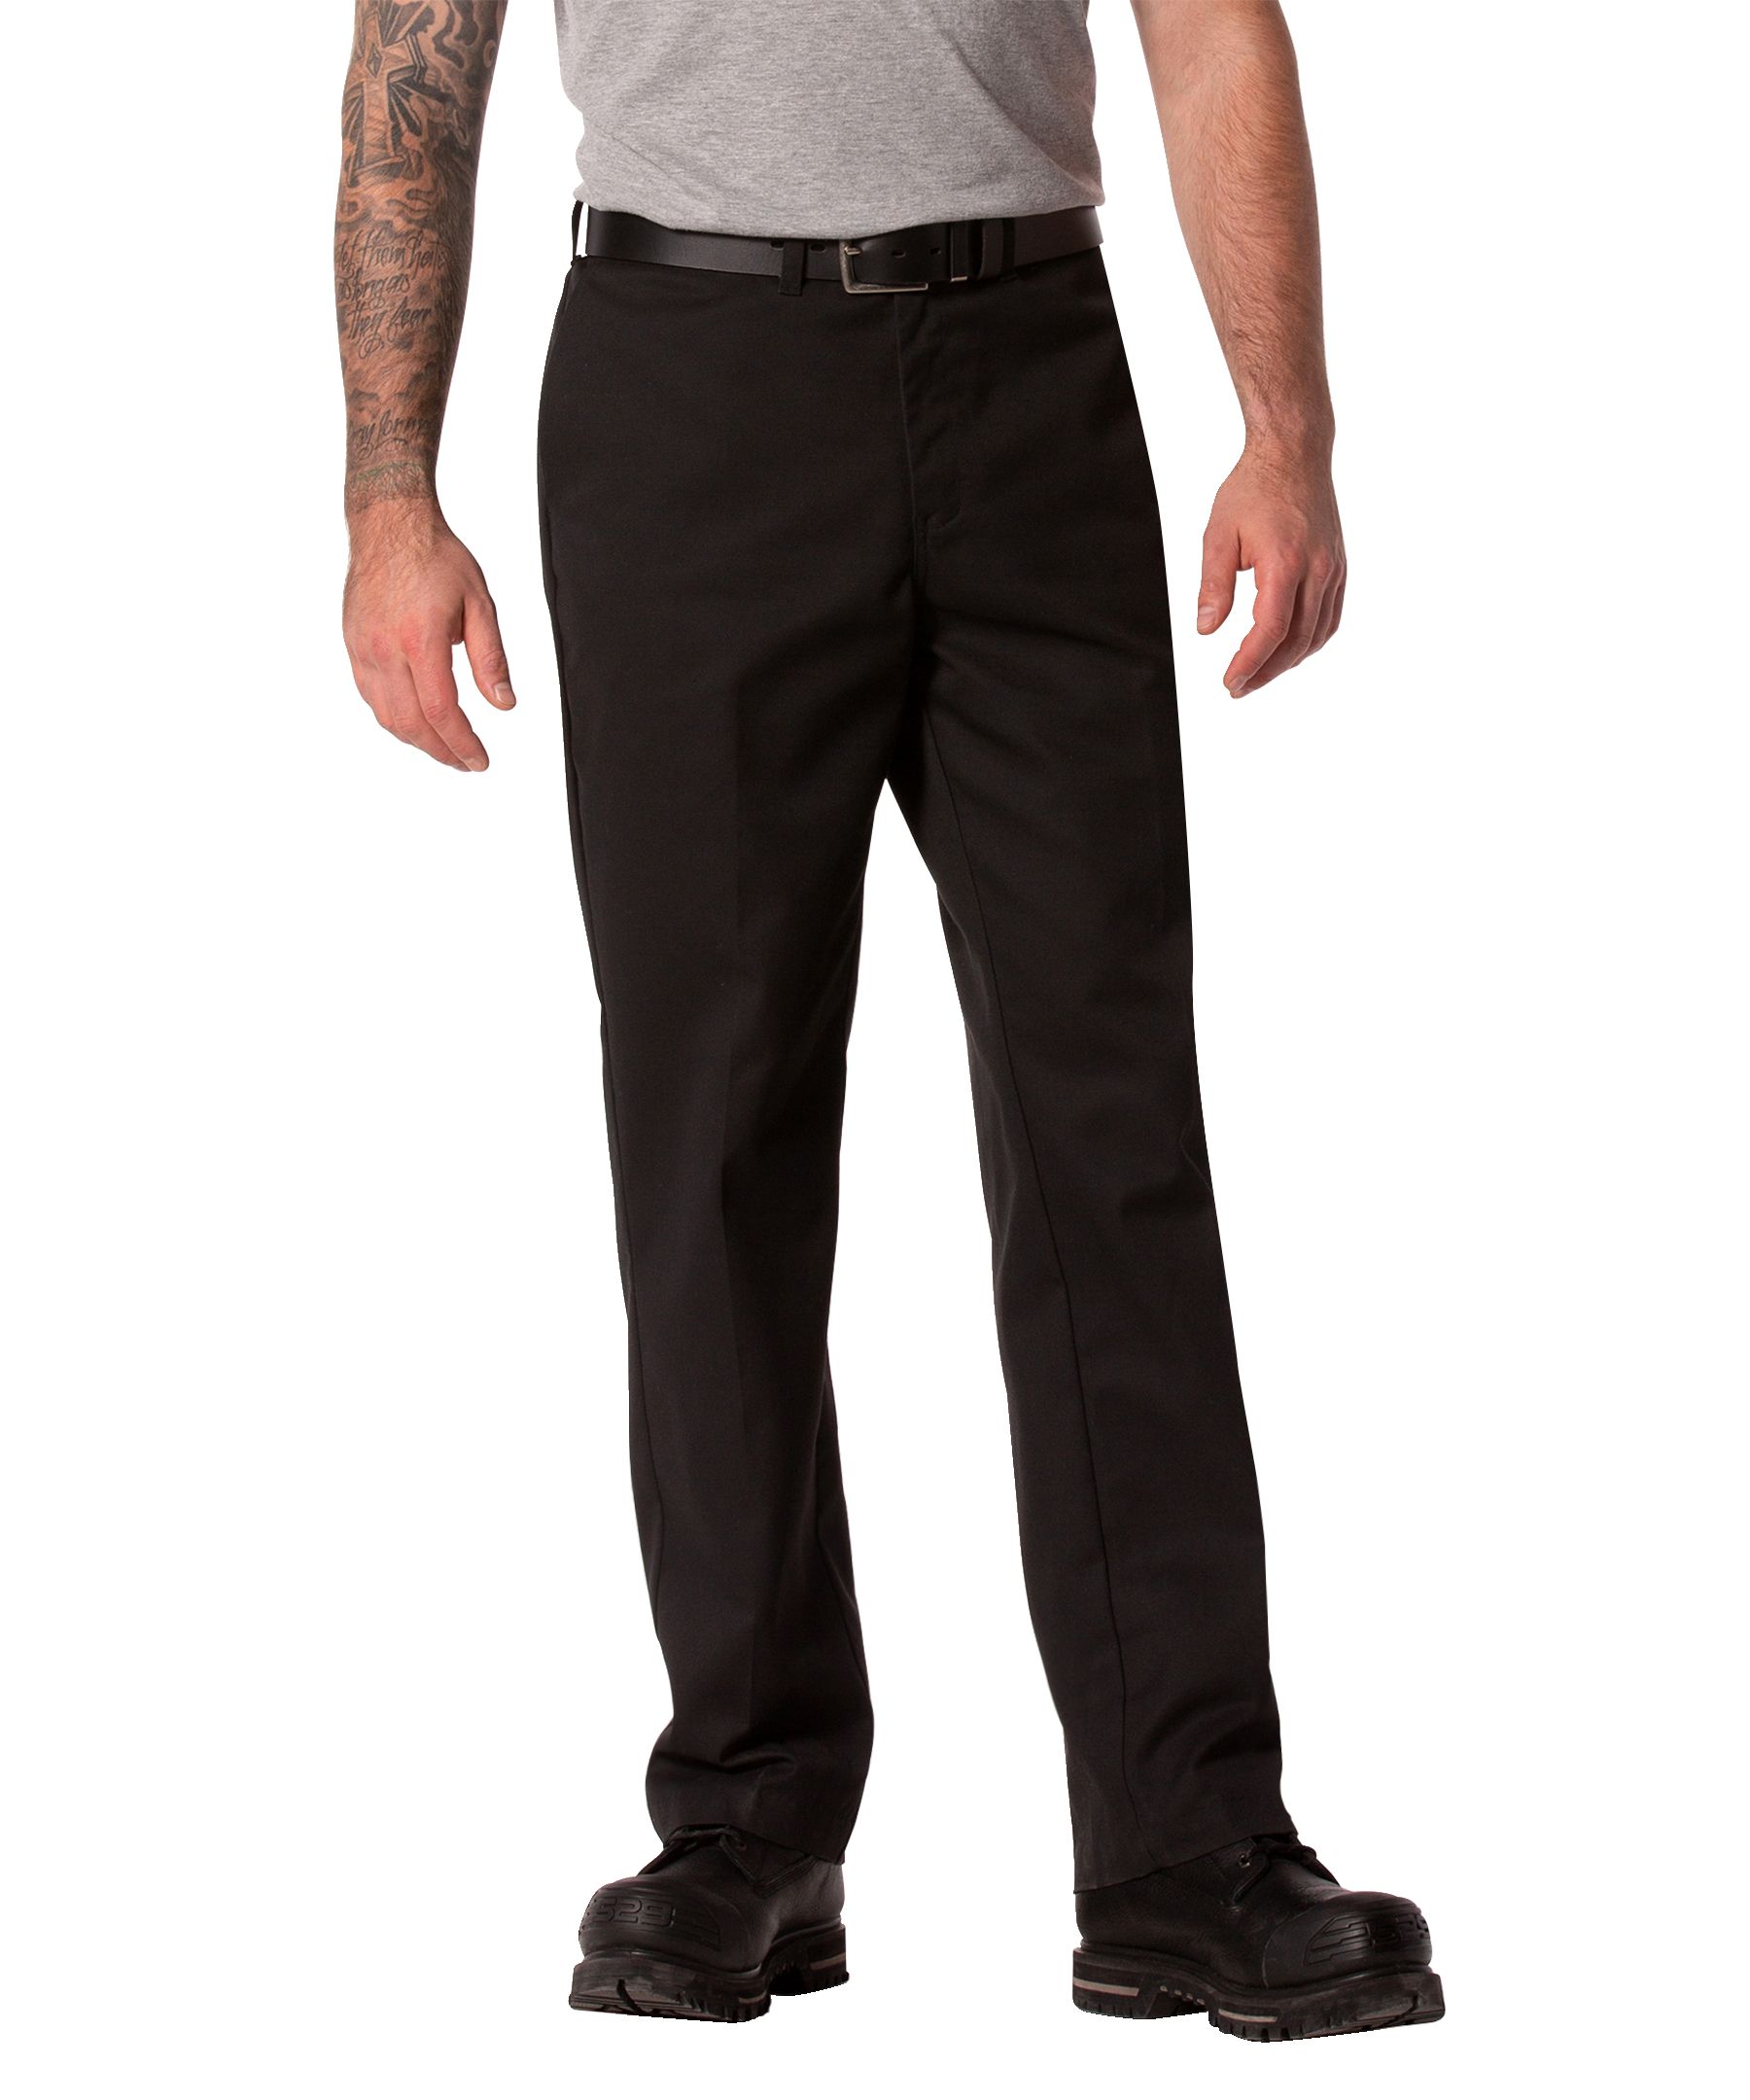 Dakota WorkPro Series Men's Stretch Twill Flat Front Work Pants